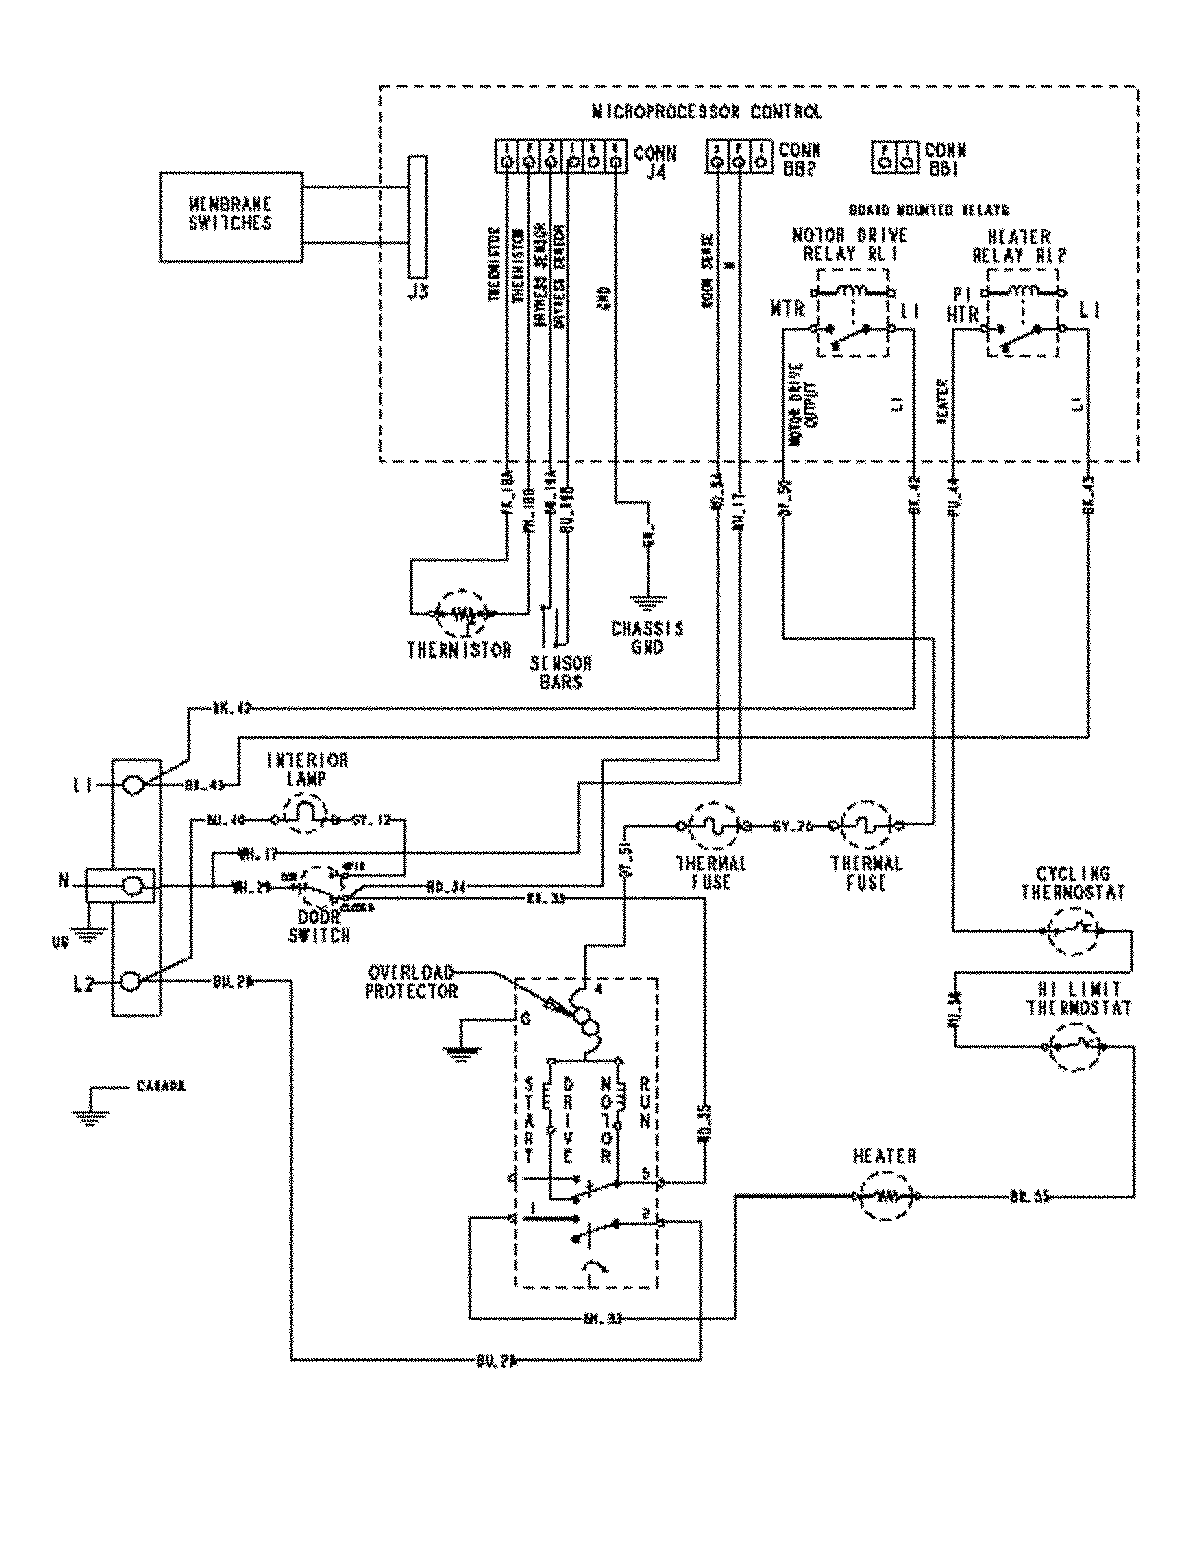 Wiring Information Diagram  U0026 Parts List For Model